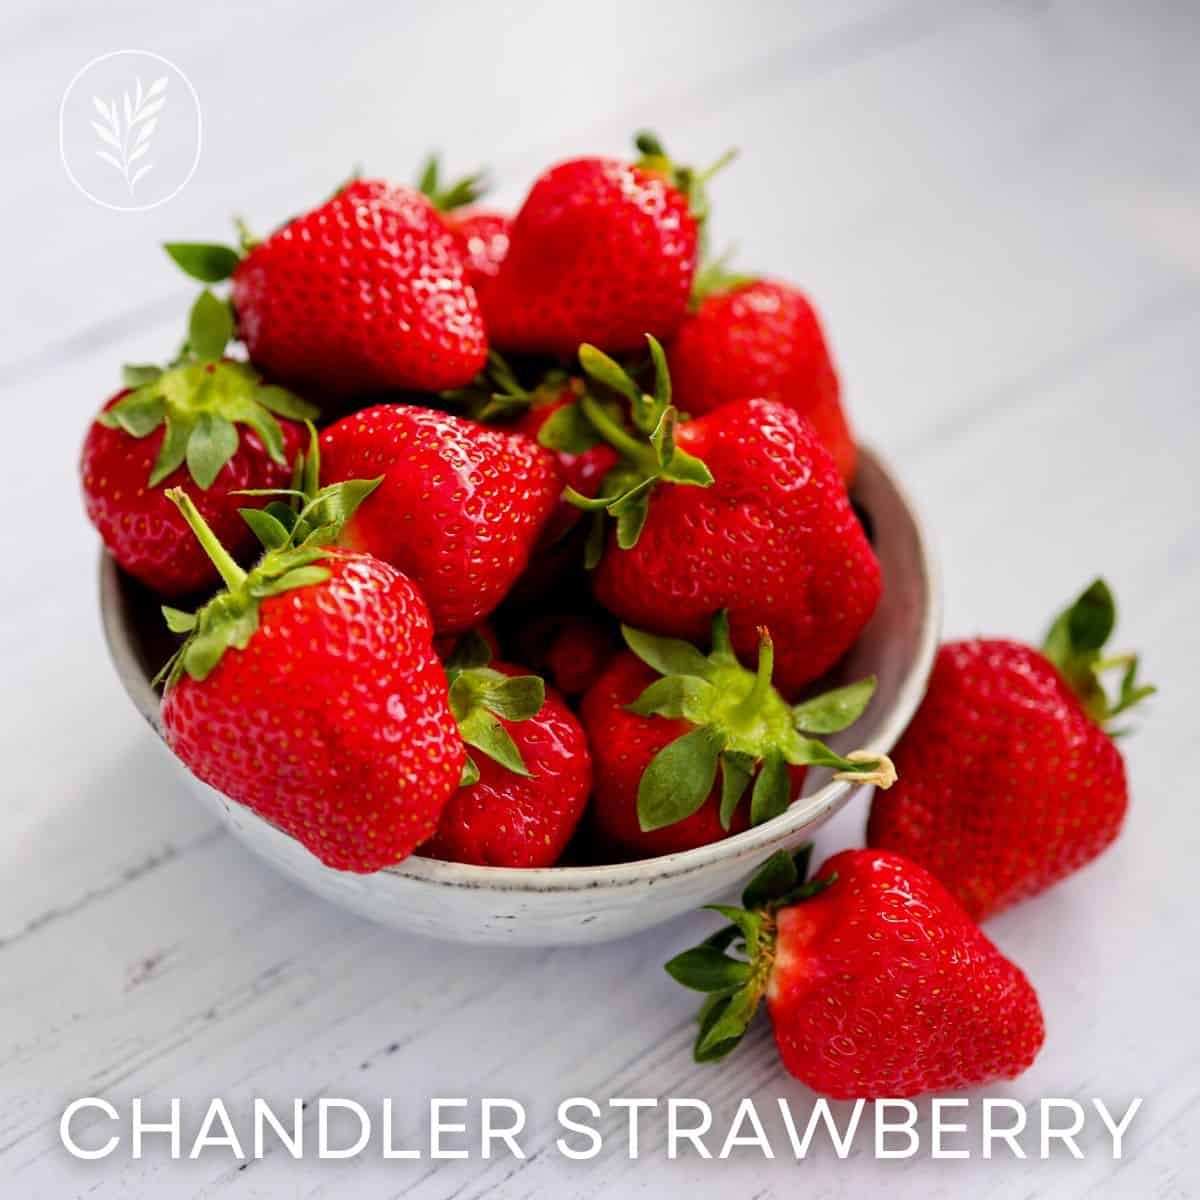 Chandler strawberry via @home4theharvest